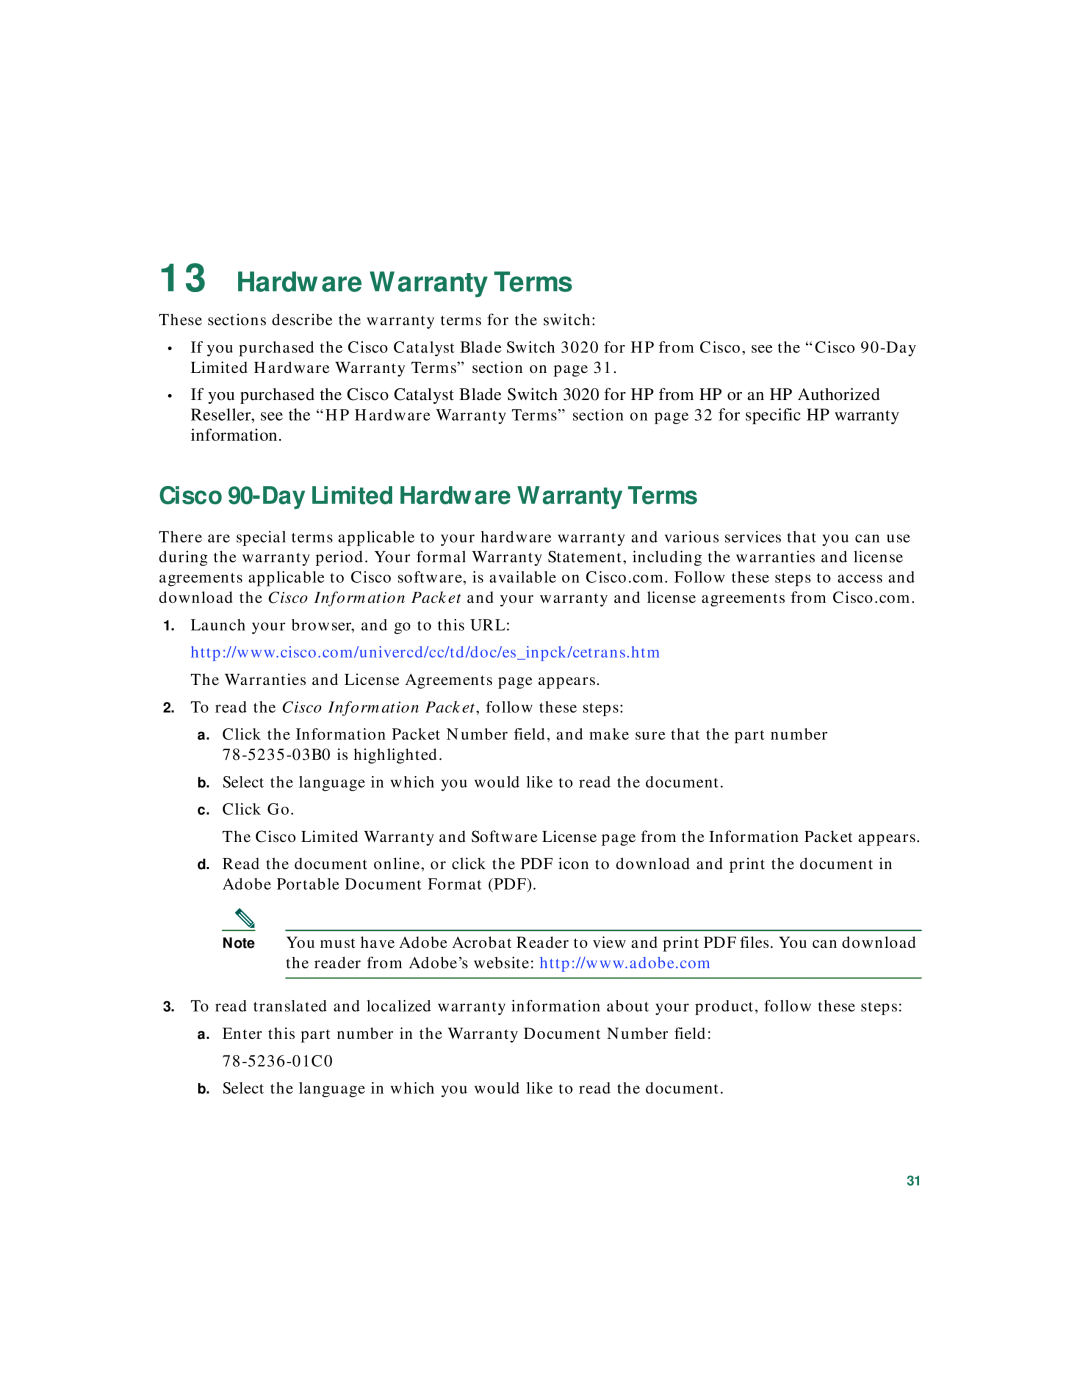 Cisco Systems 3020 warranty Cisco 90-Day Limited Hardware Warranty Terms 